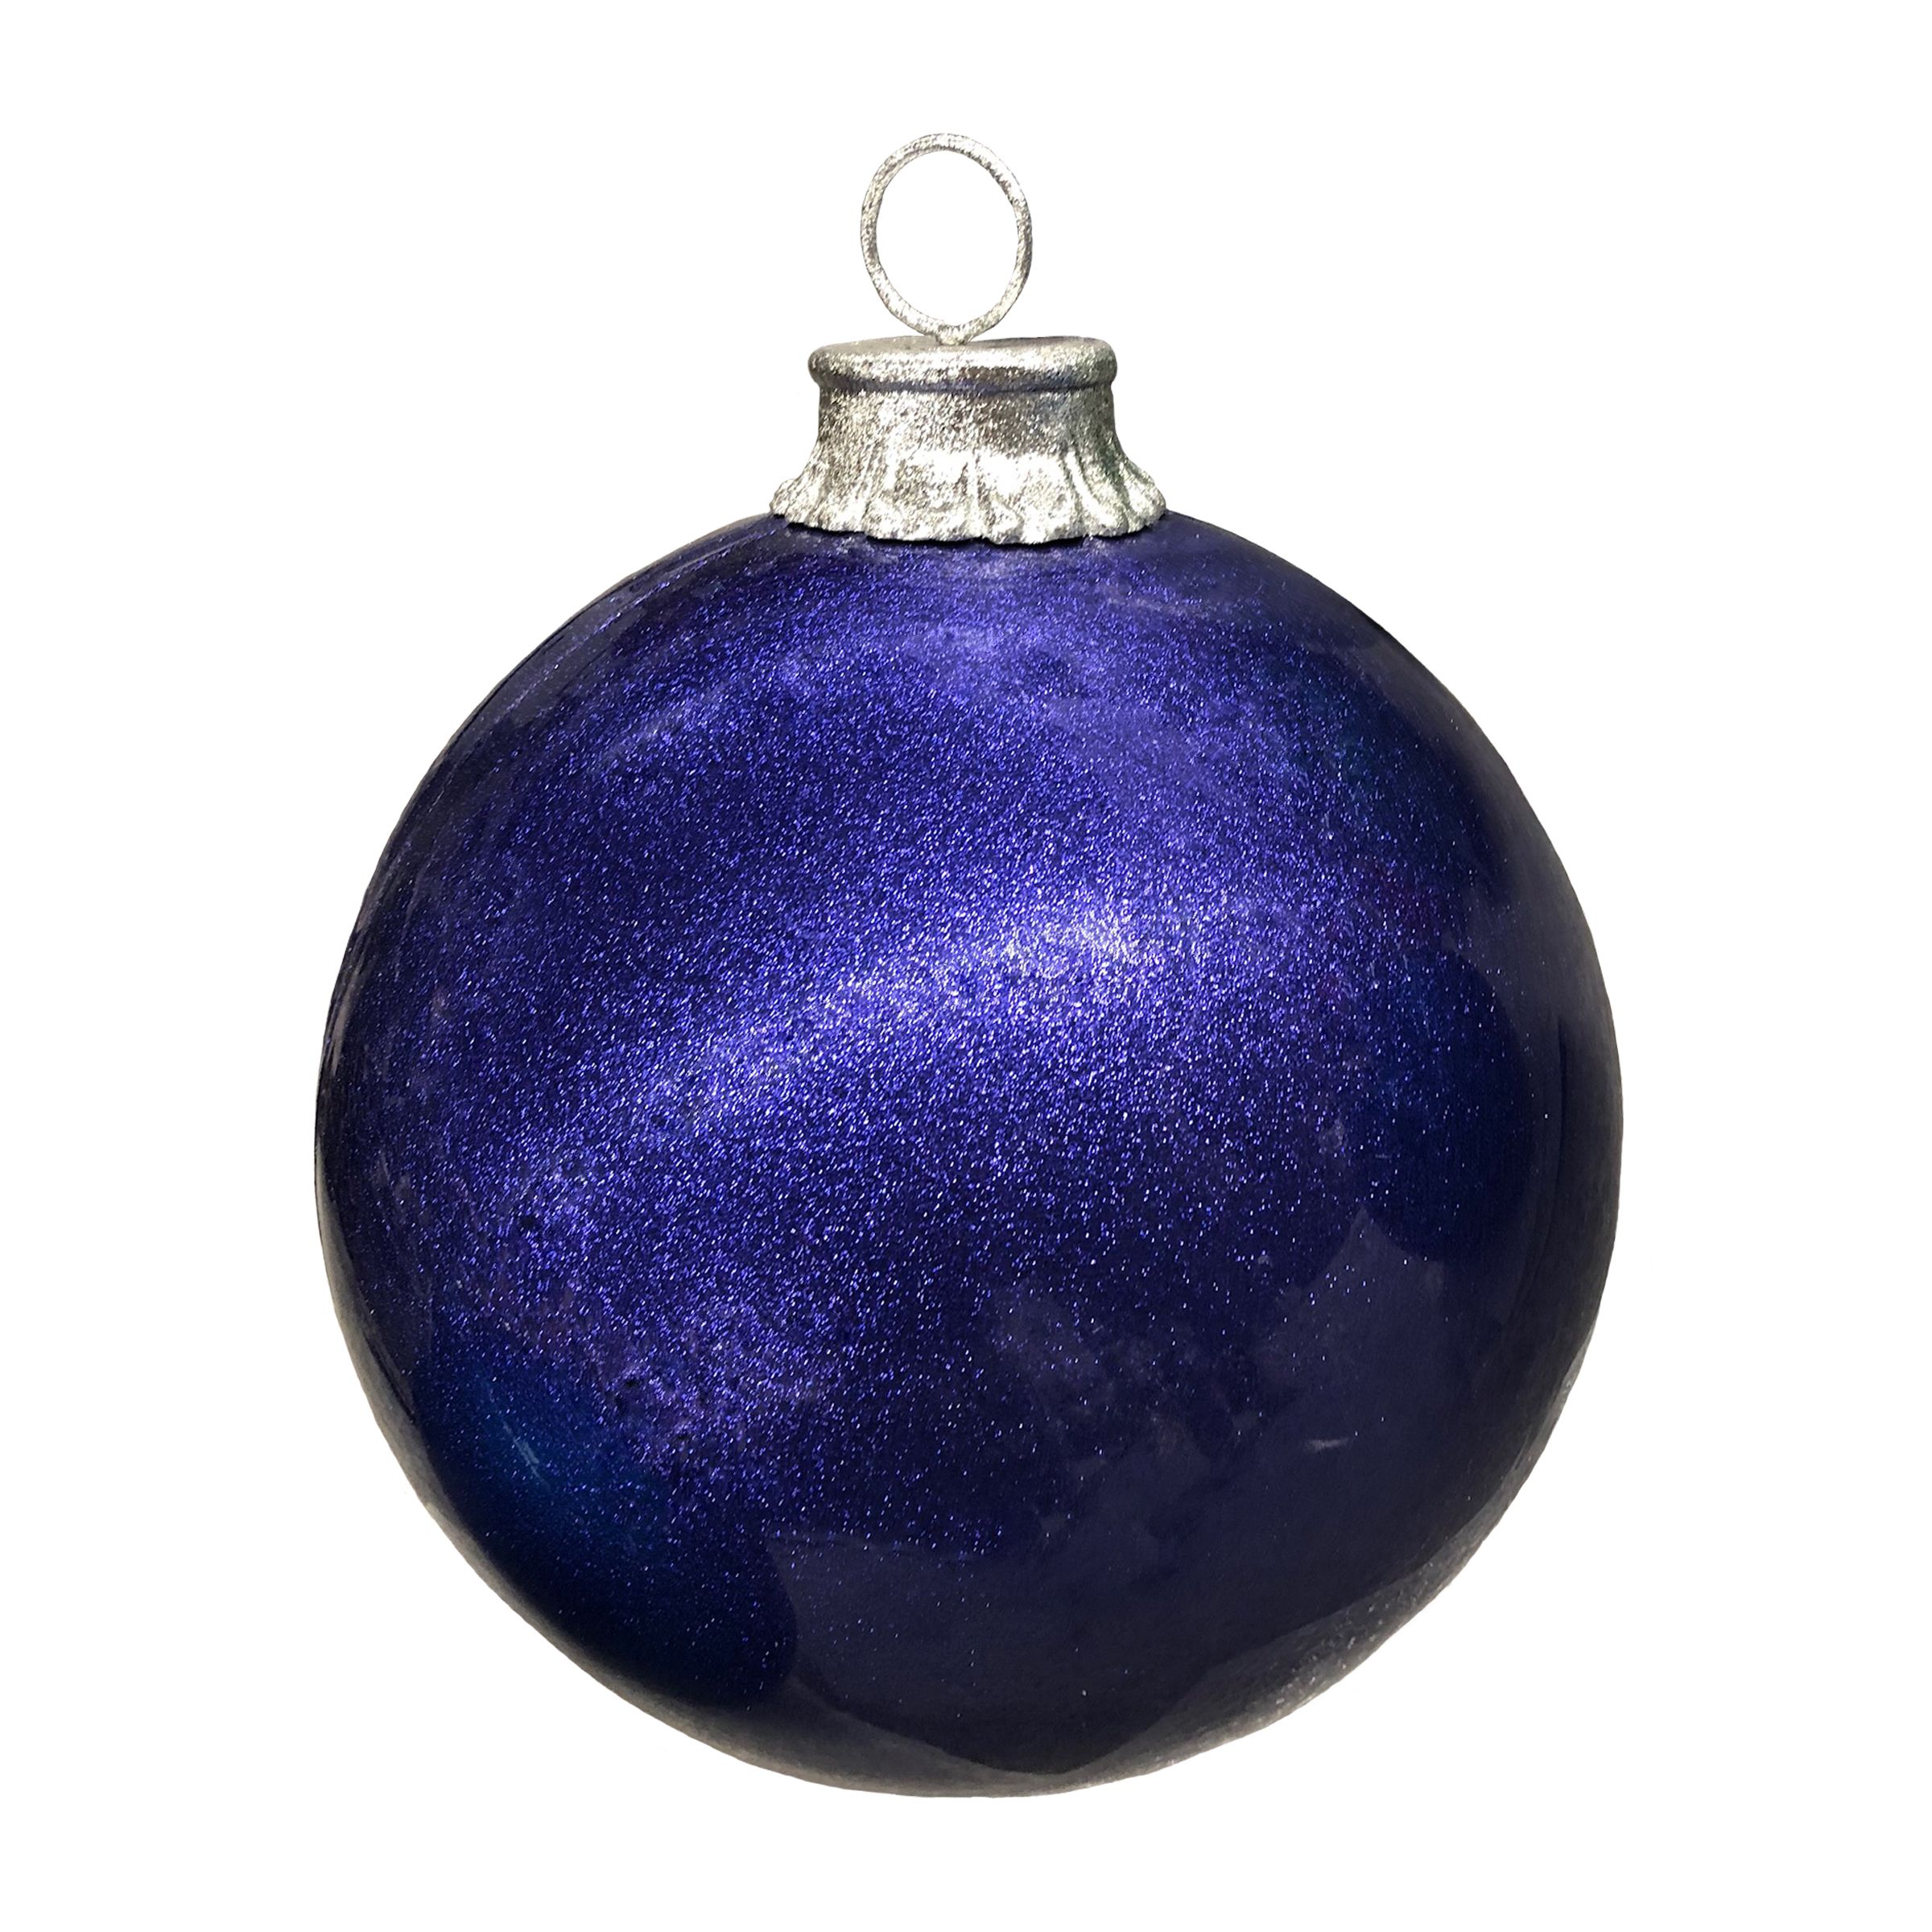 Oversized fiberglass ball ornament in navy glitter paint and silver cap